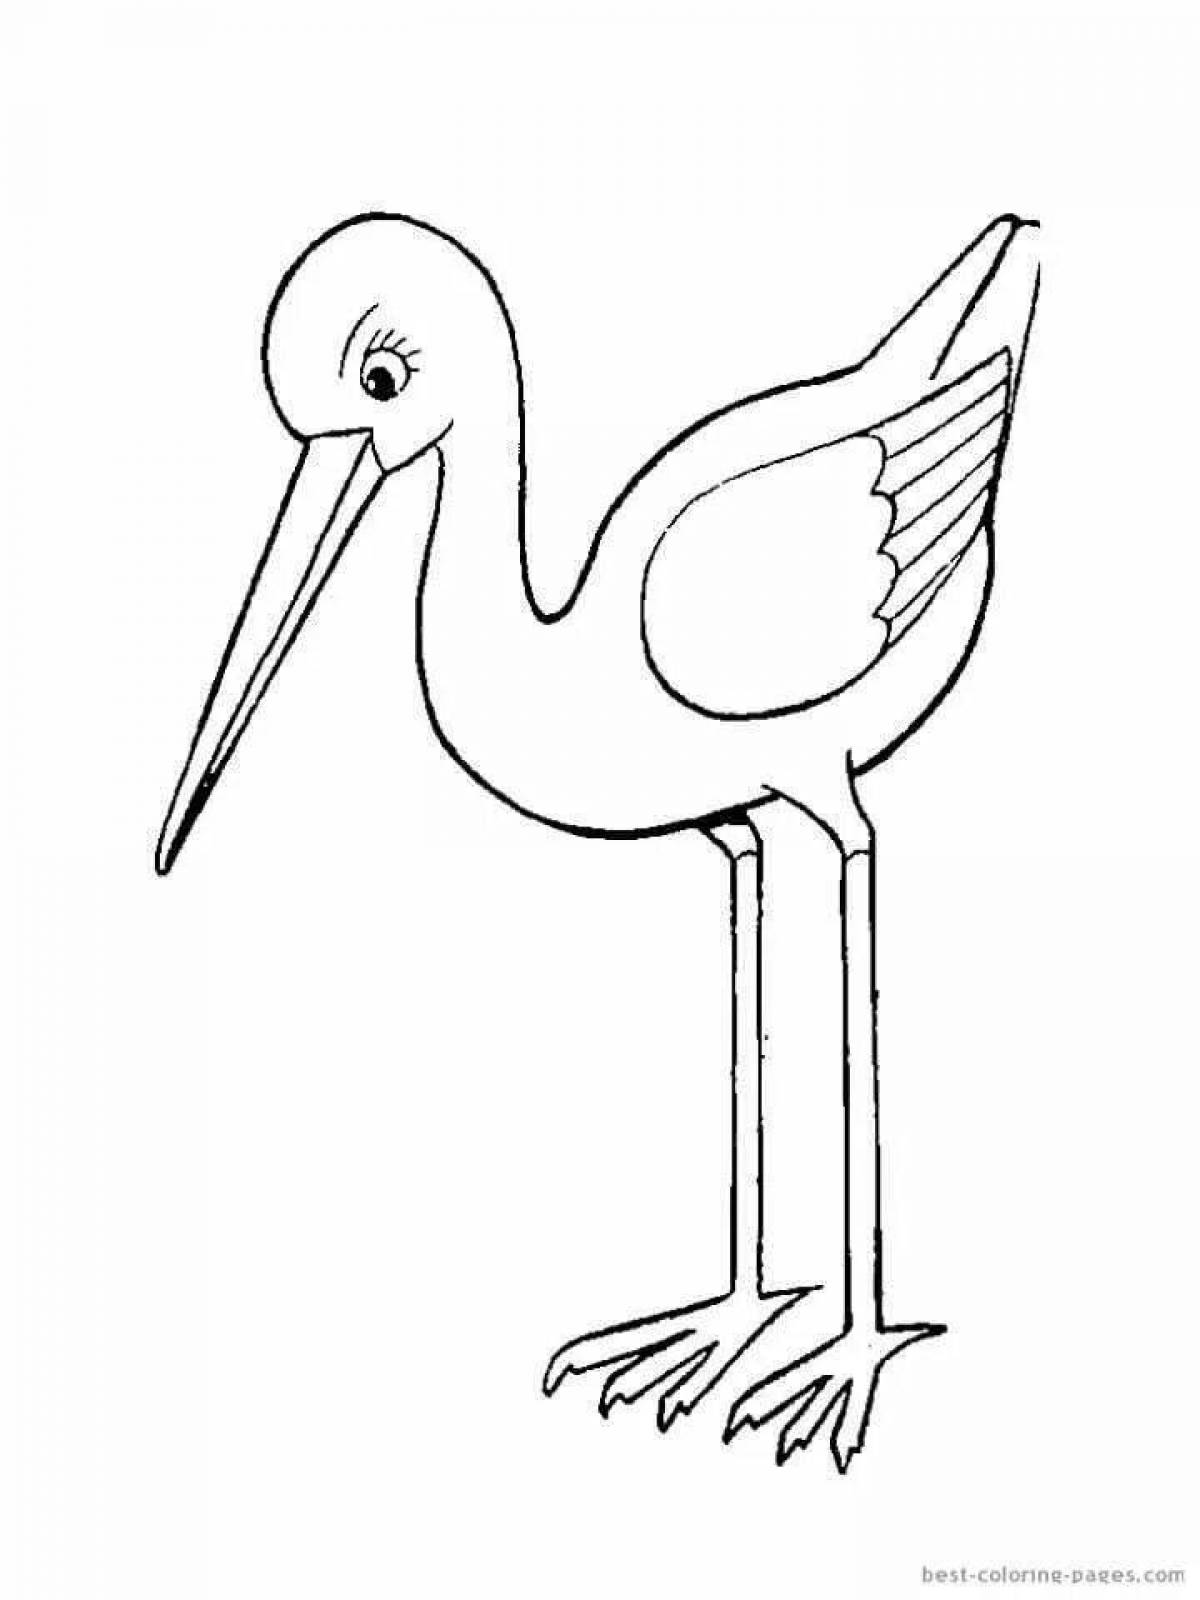 Rampant black stork coloring page